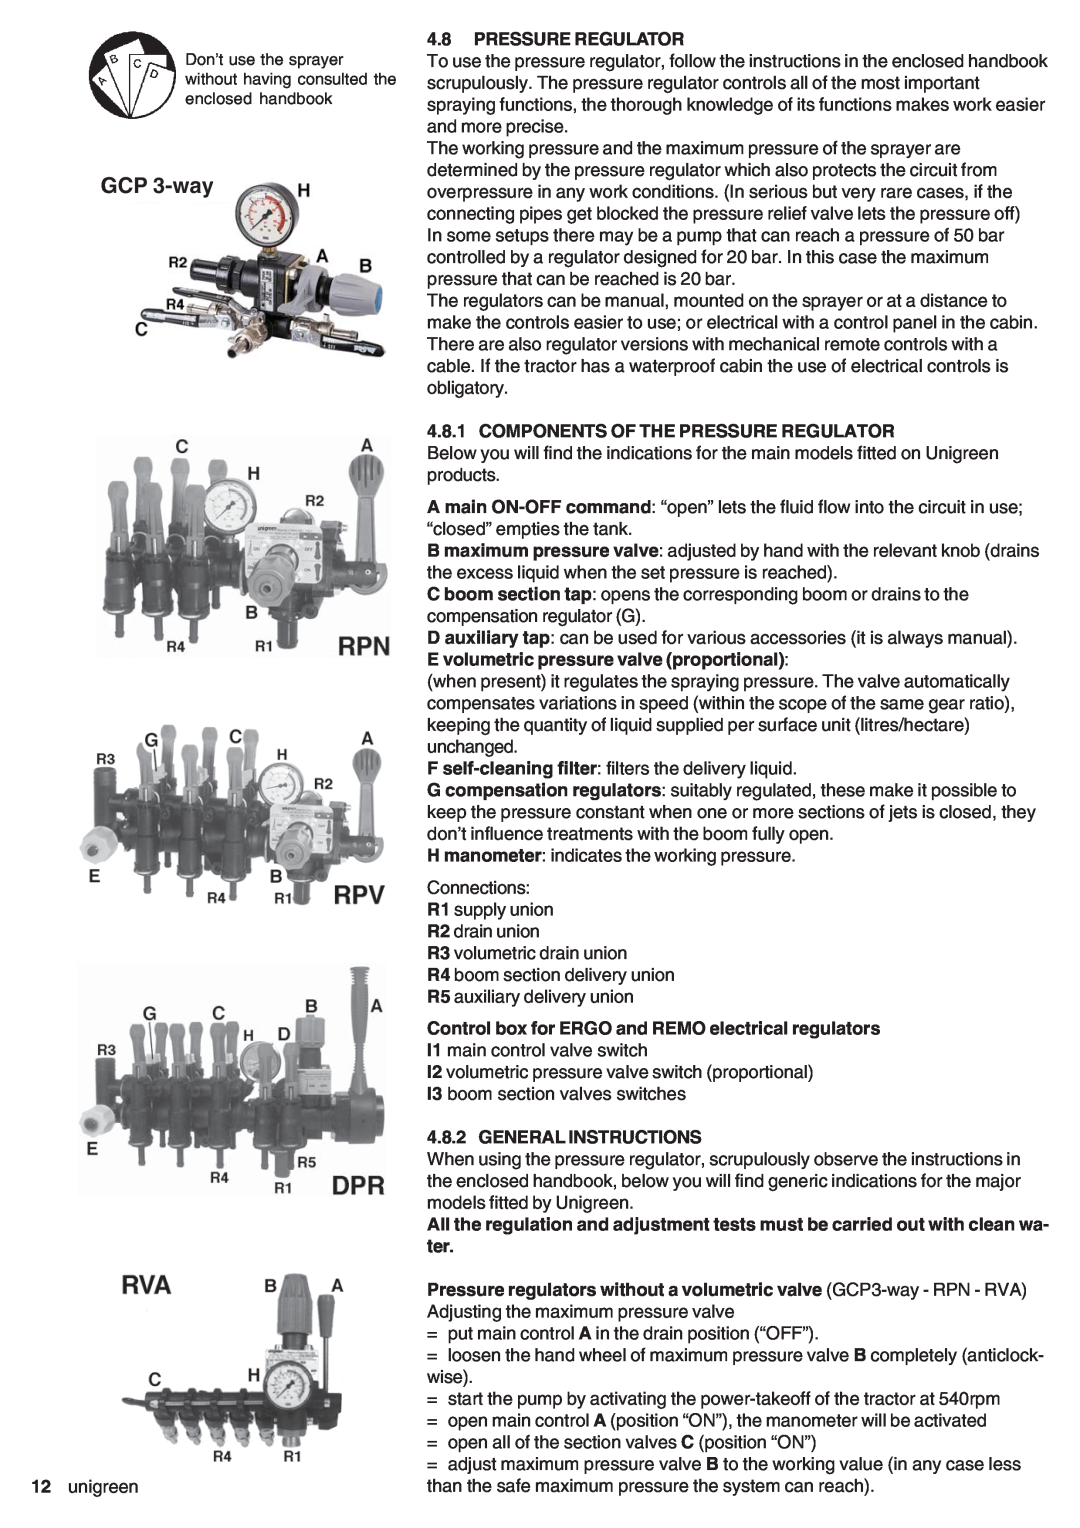 Unigreen DSP 11 - 16 - 22 - 32 manual GCP 3-way, Components Of The Pressure Regulator, General Instructions 